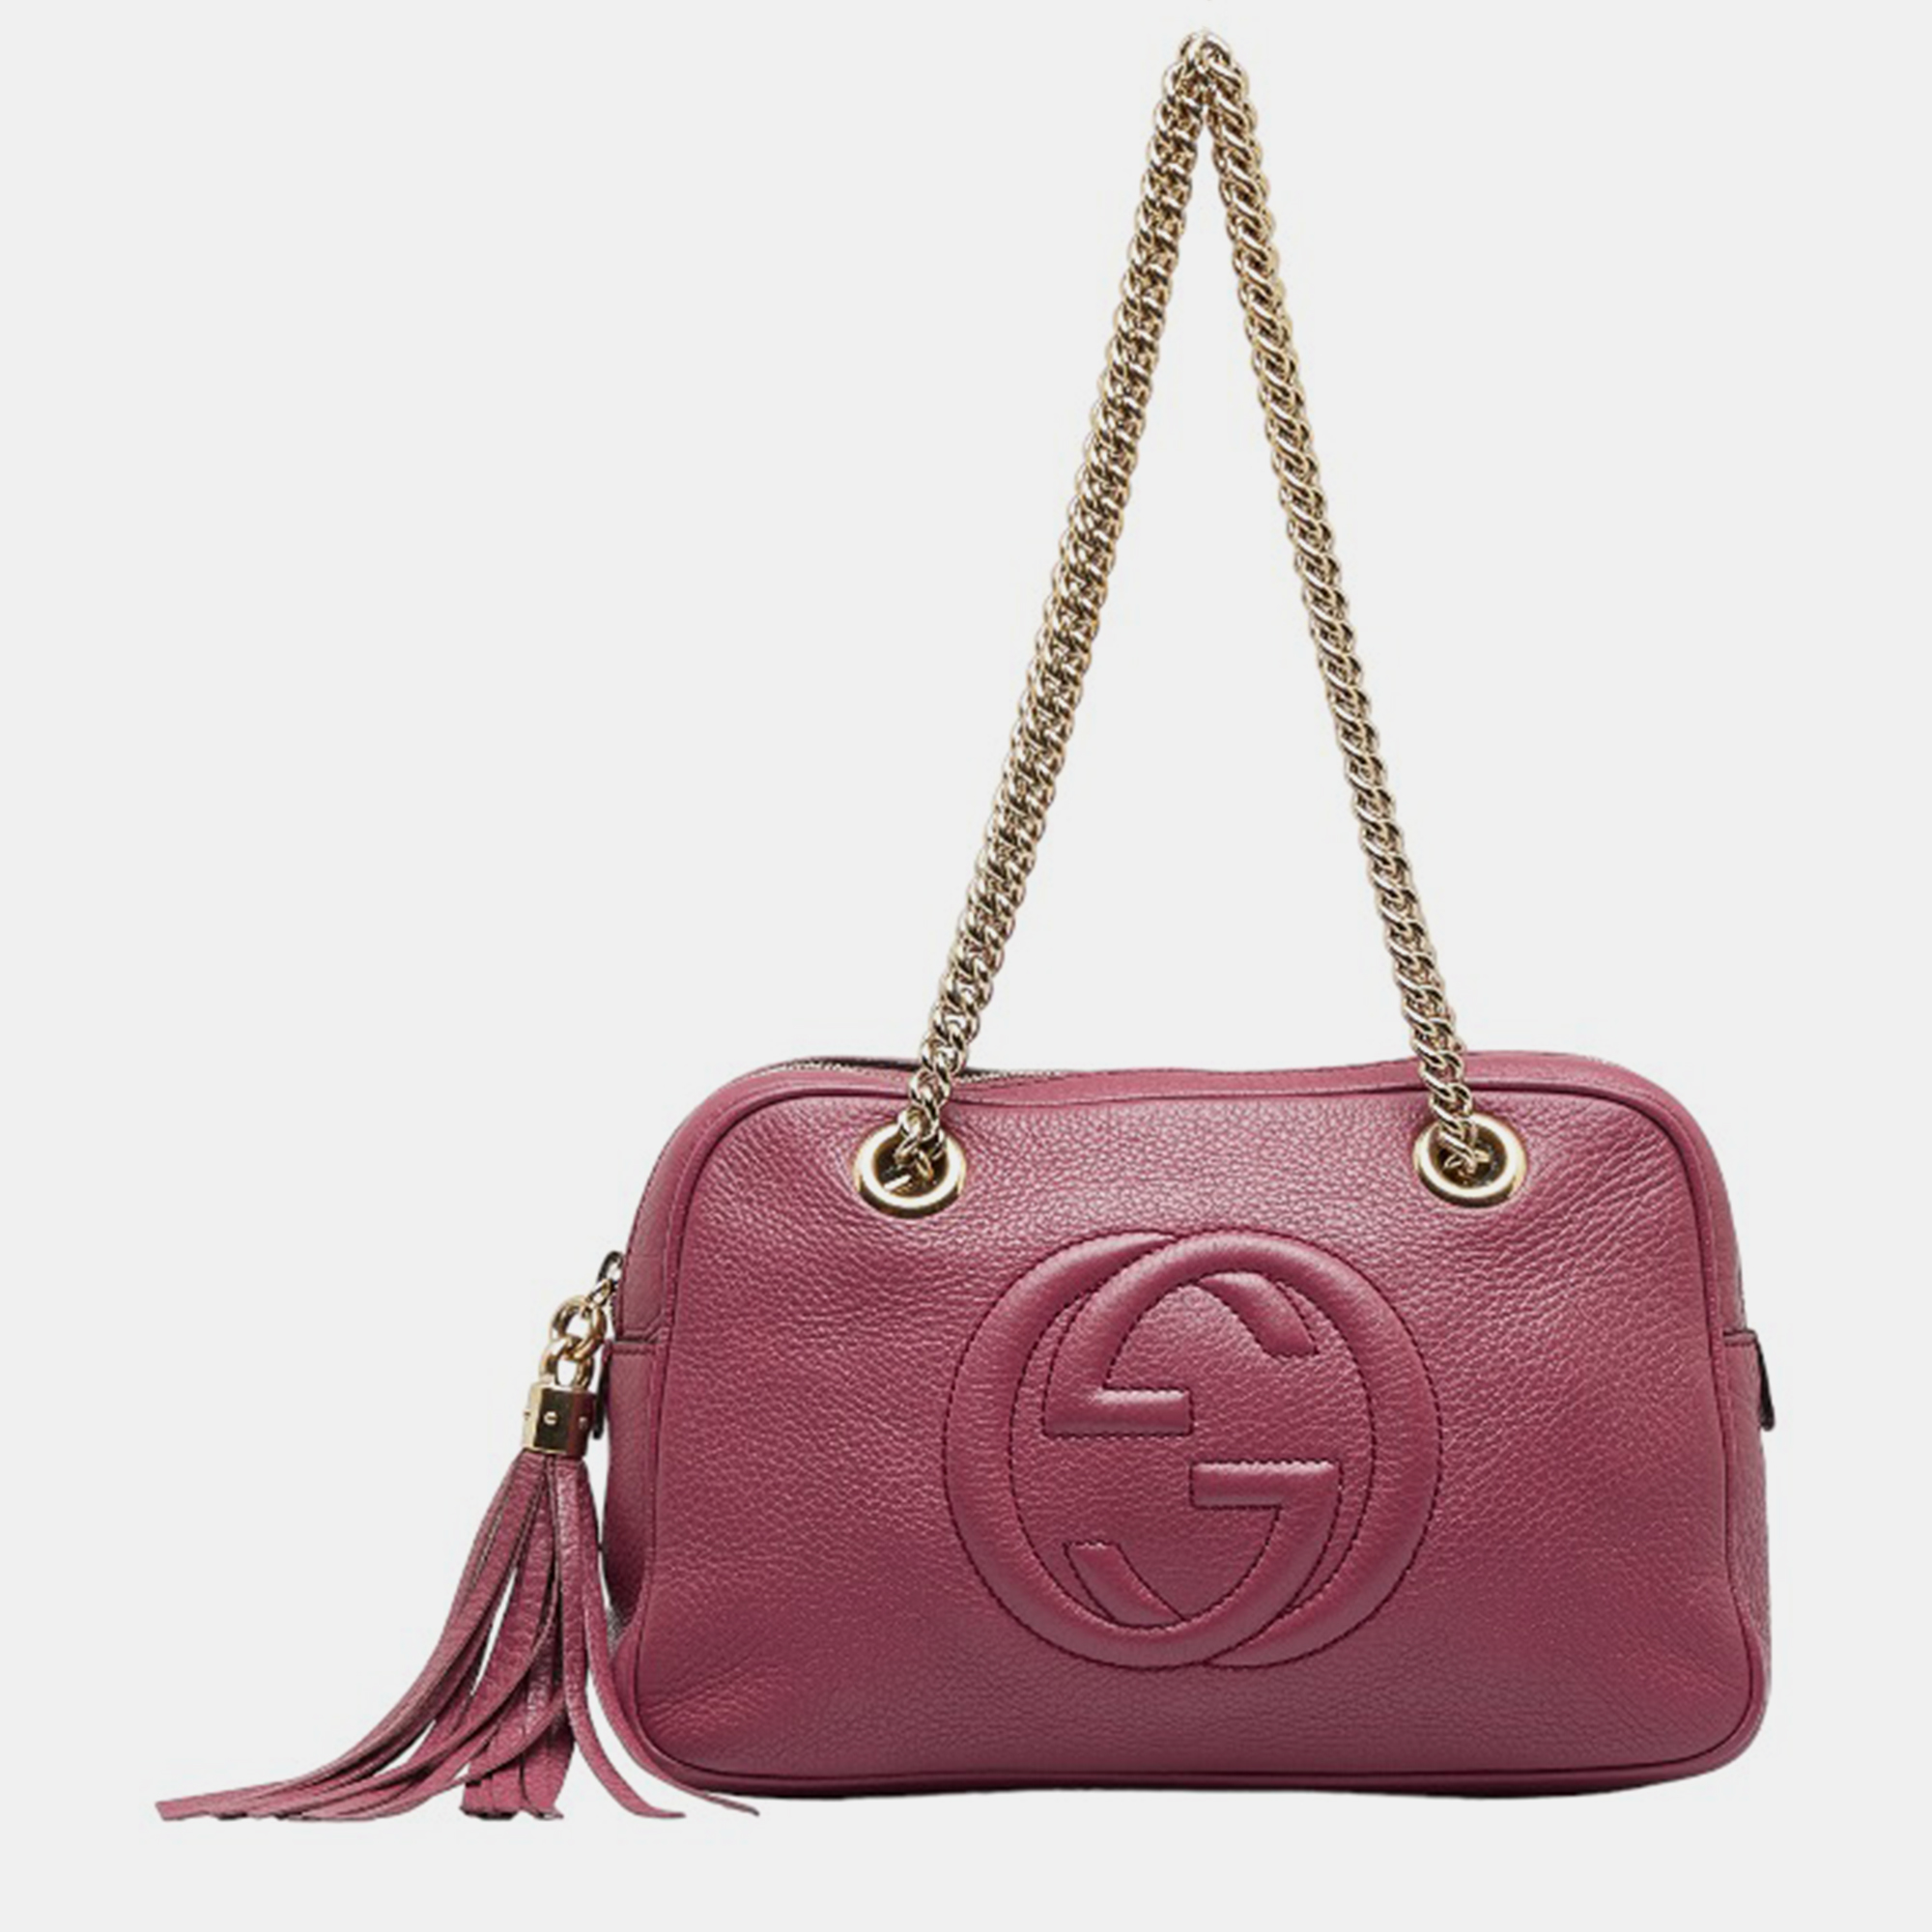 Gucci Purple Leather Soho Chain Shoulder Bag